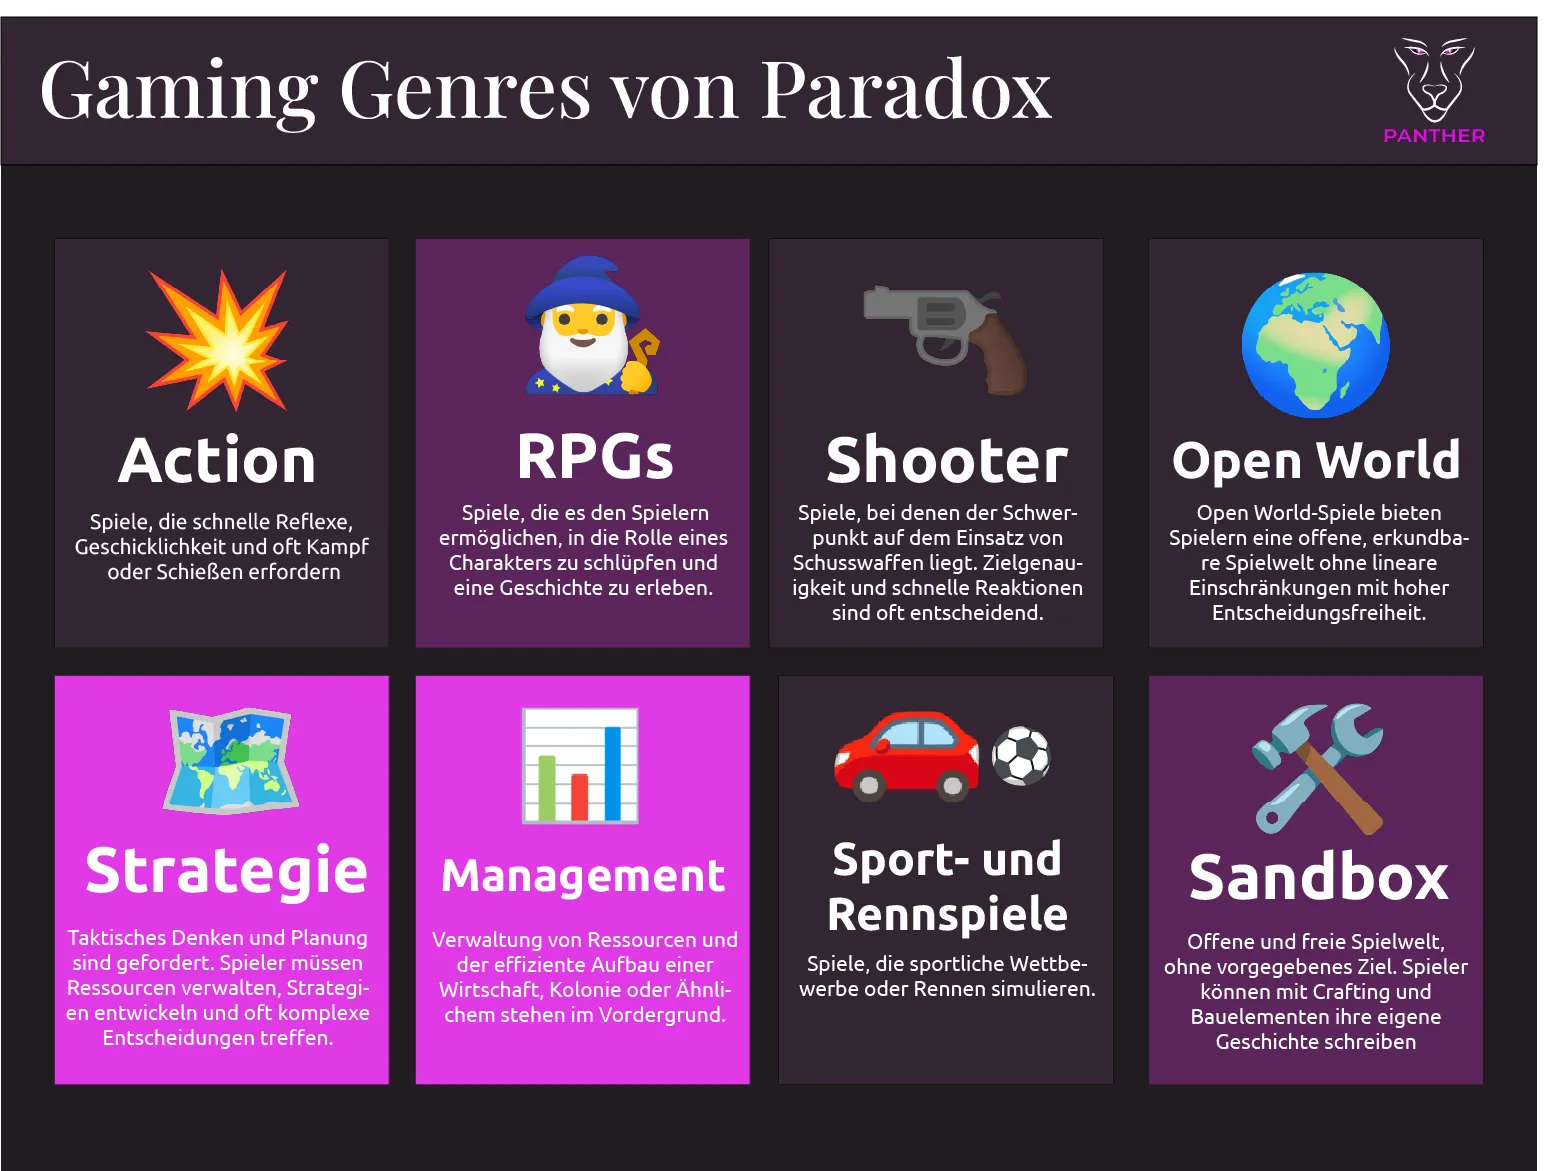 Pardox Interactive Gaming Genres im Ueberblick